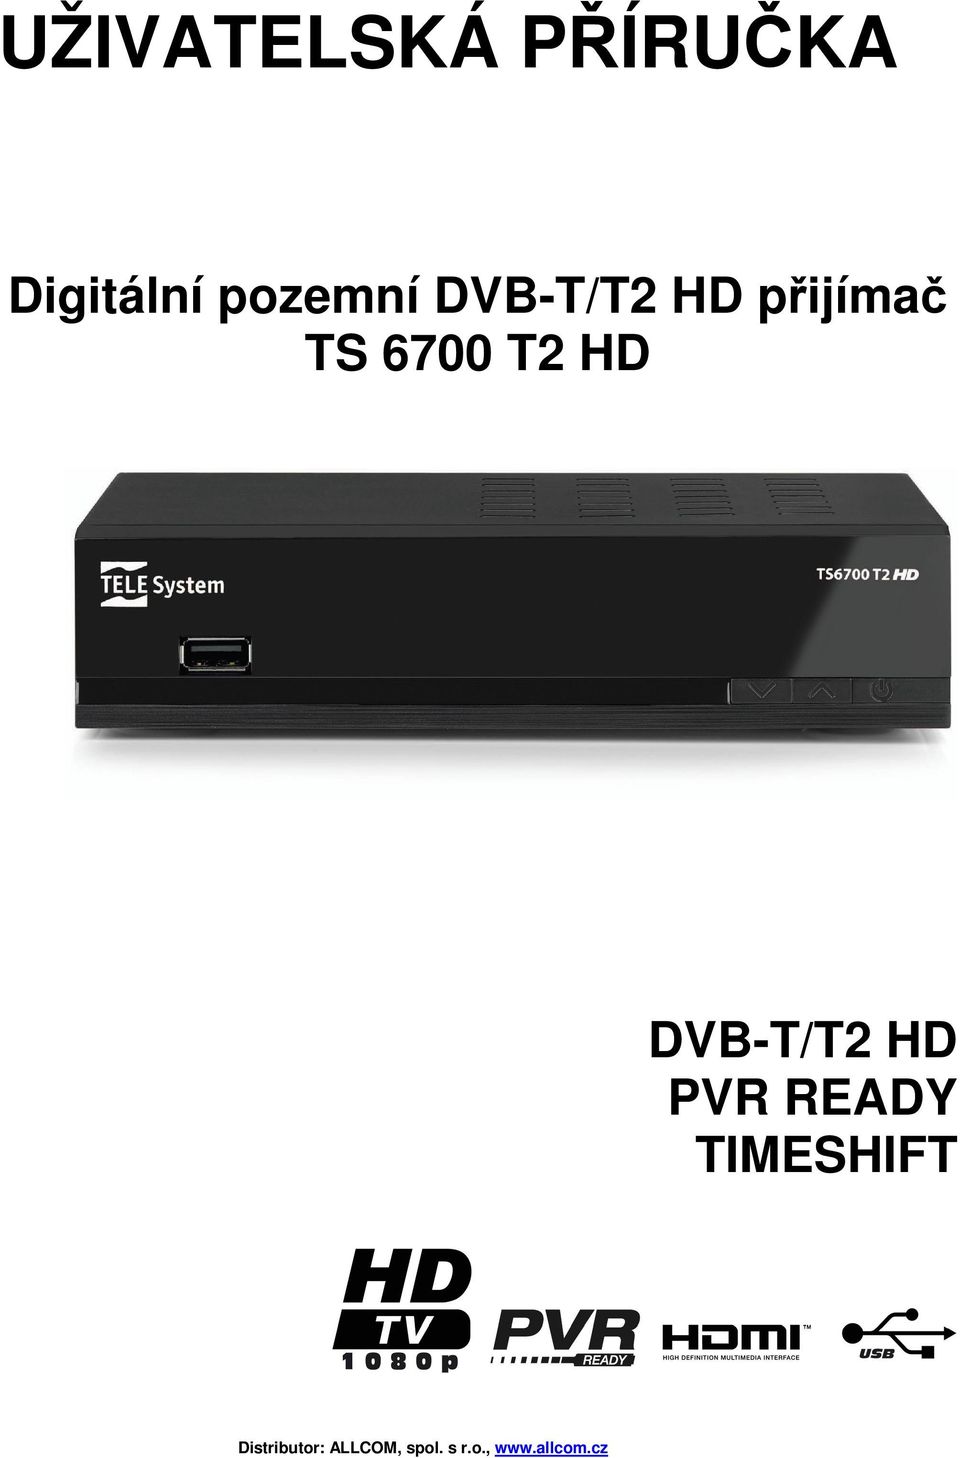 DVB-T/T2 HD PVR READY TIMESHIFT